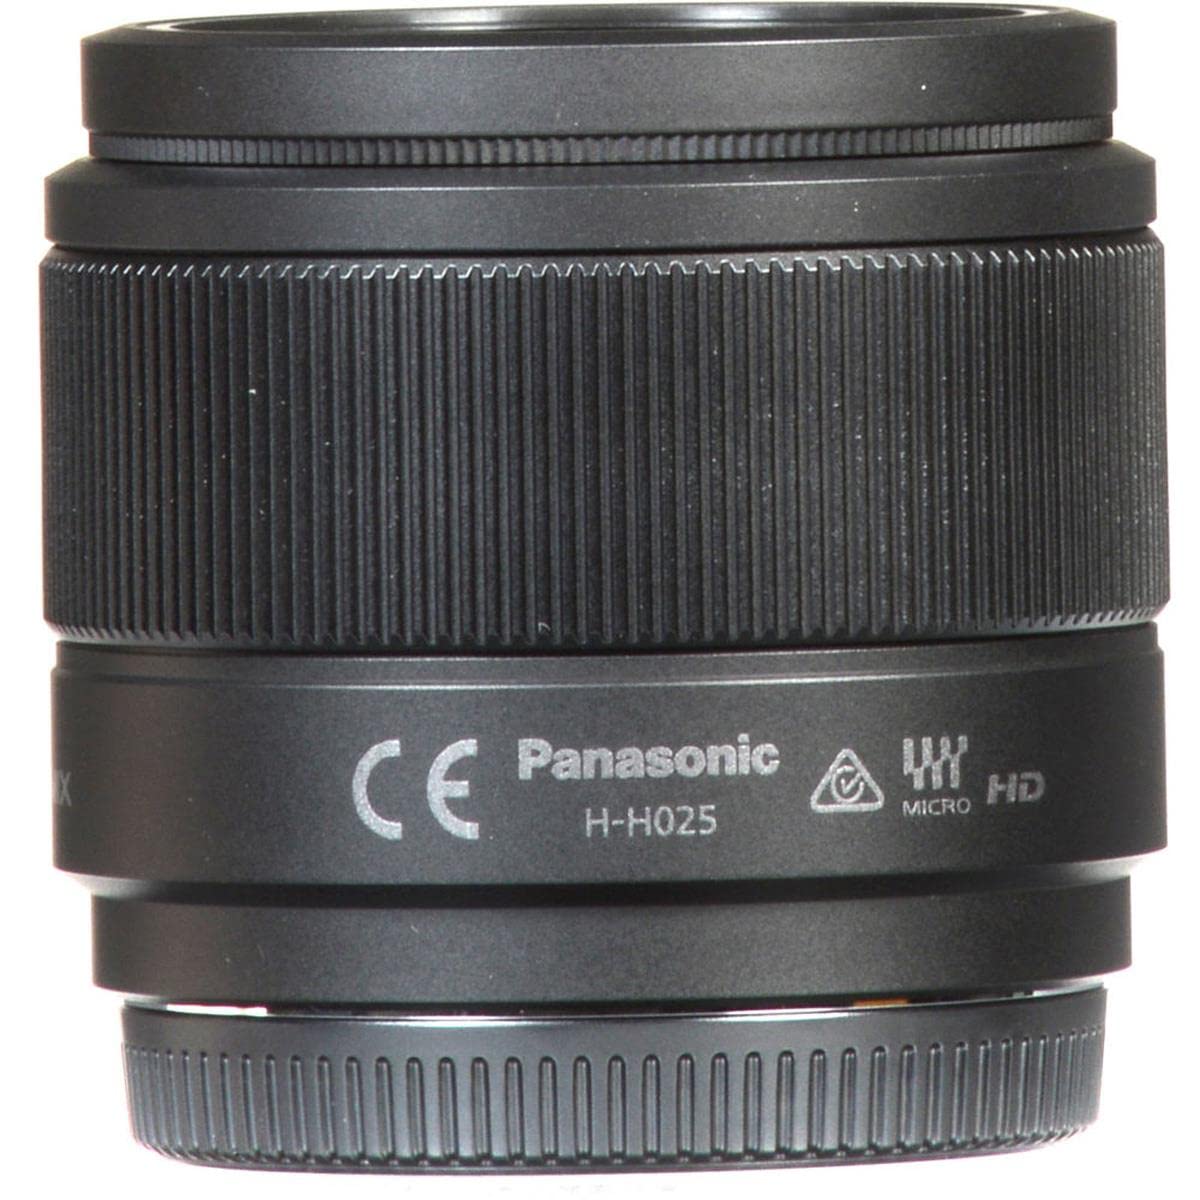 PANASONIC LUMIX G Lens, 25mm, F1.7 ASPH, Mirrorless Micro Four Thirds, H-H025K (USA Black)